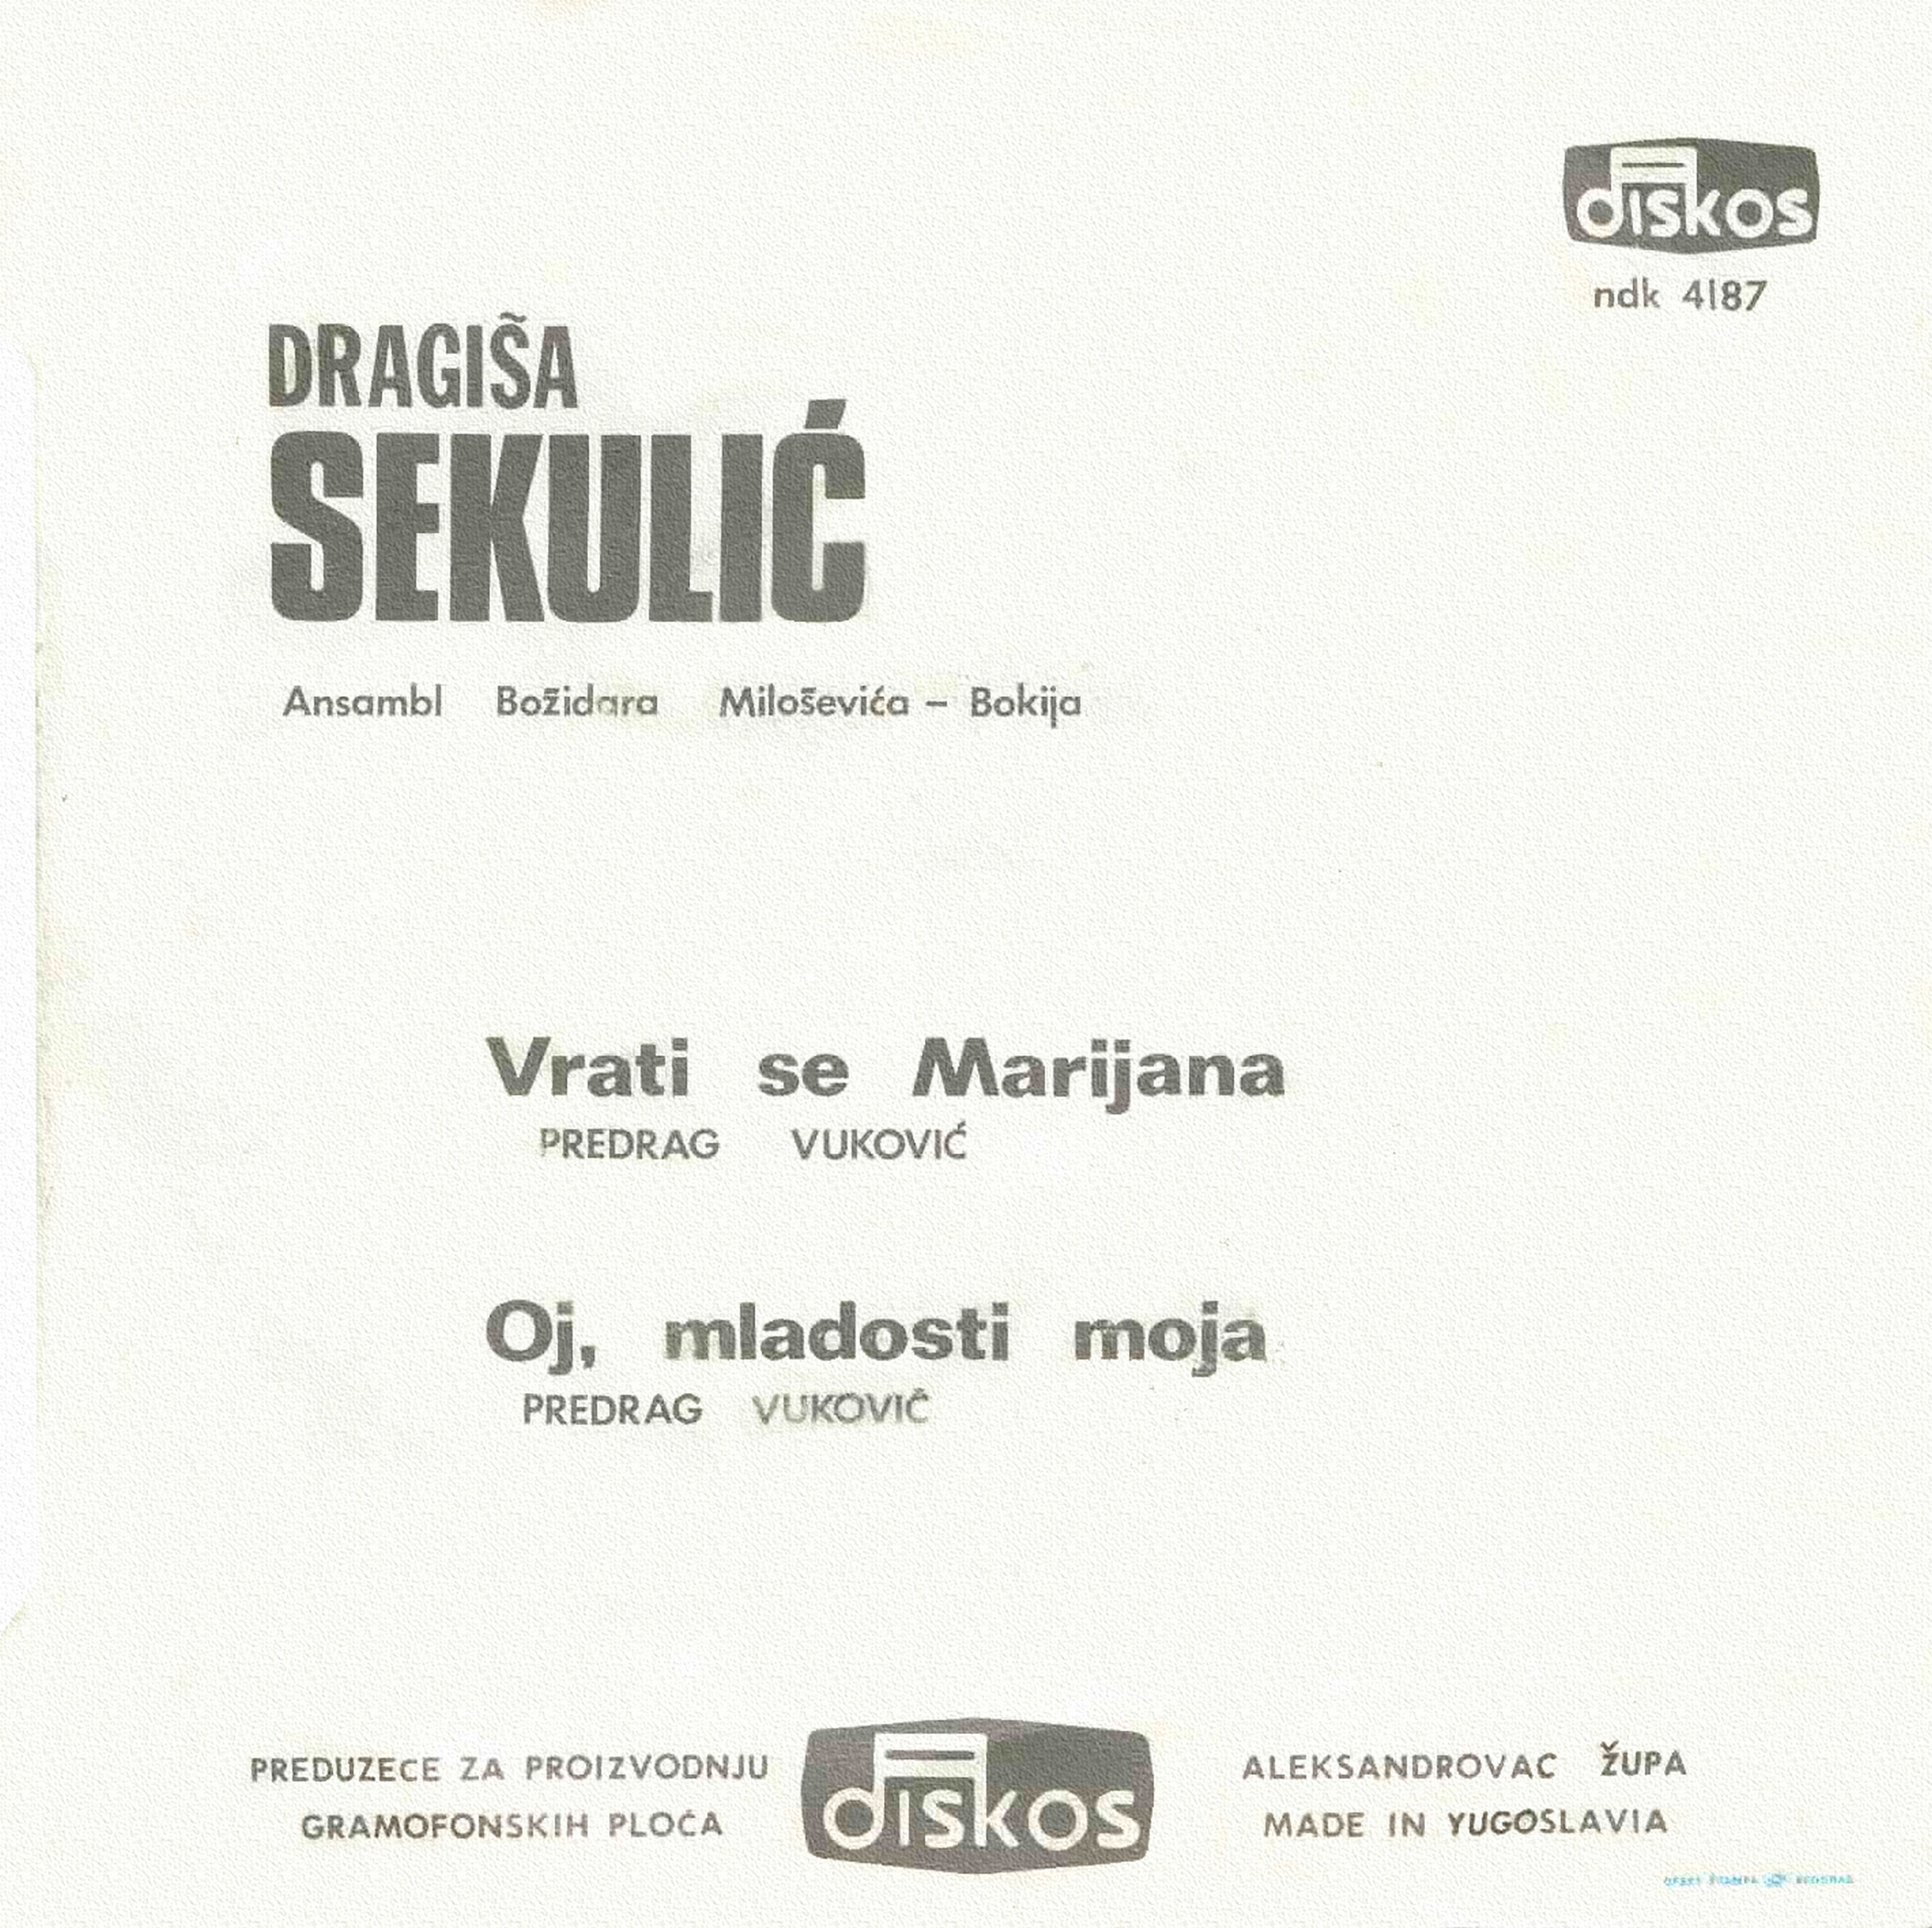 Dragisa Sekulic singl 1973 NDK 4187 zadnja